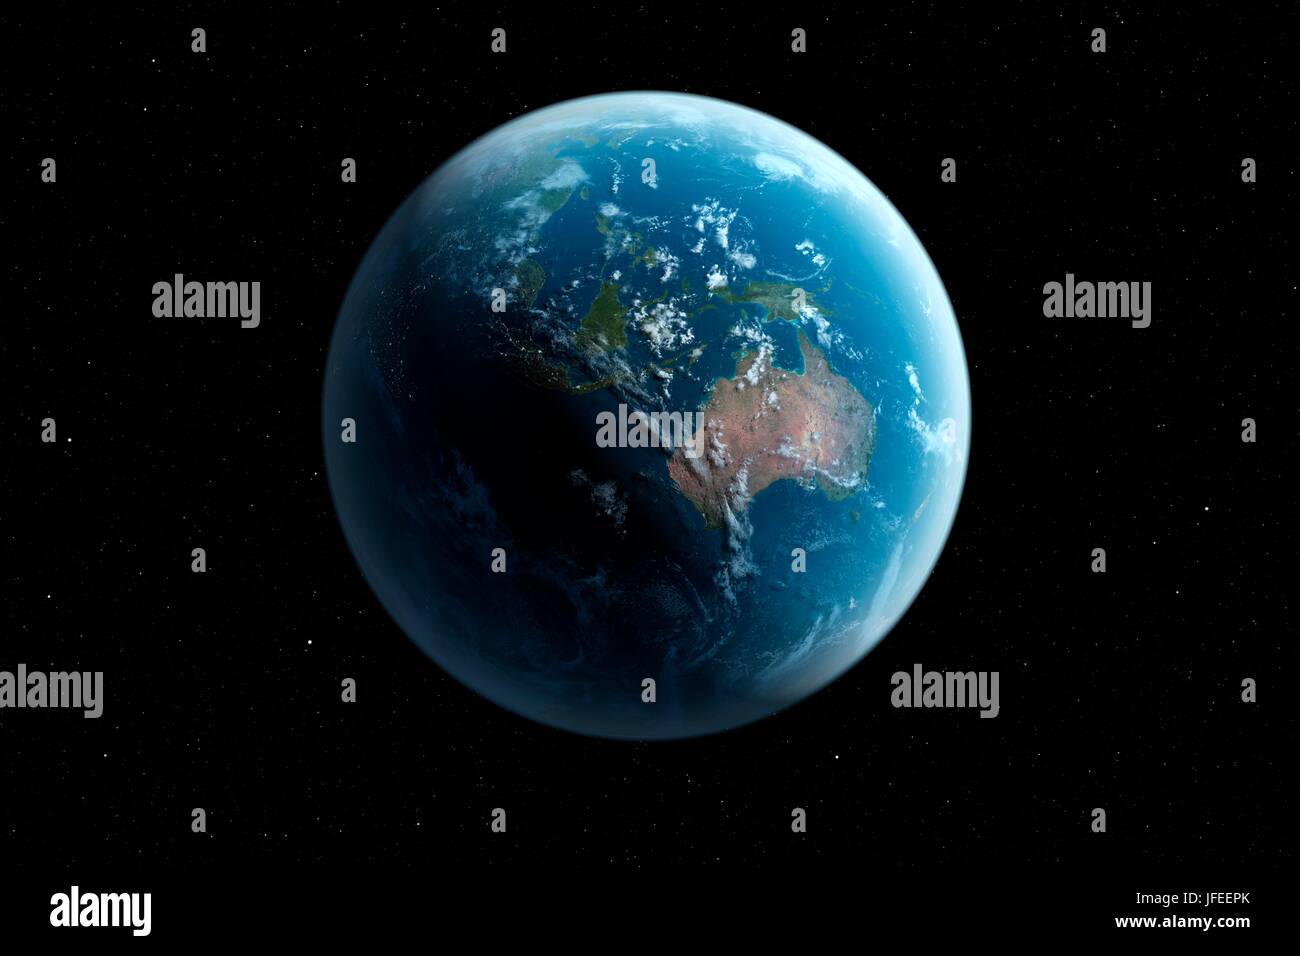 Planet Earth, illustration. Stock Photo